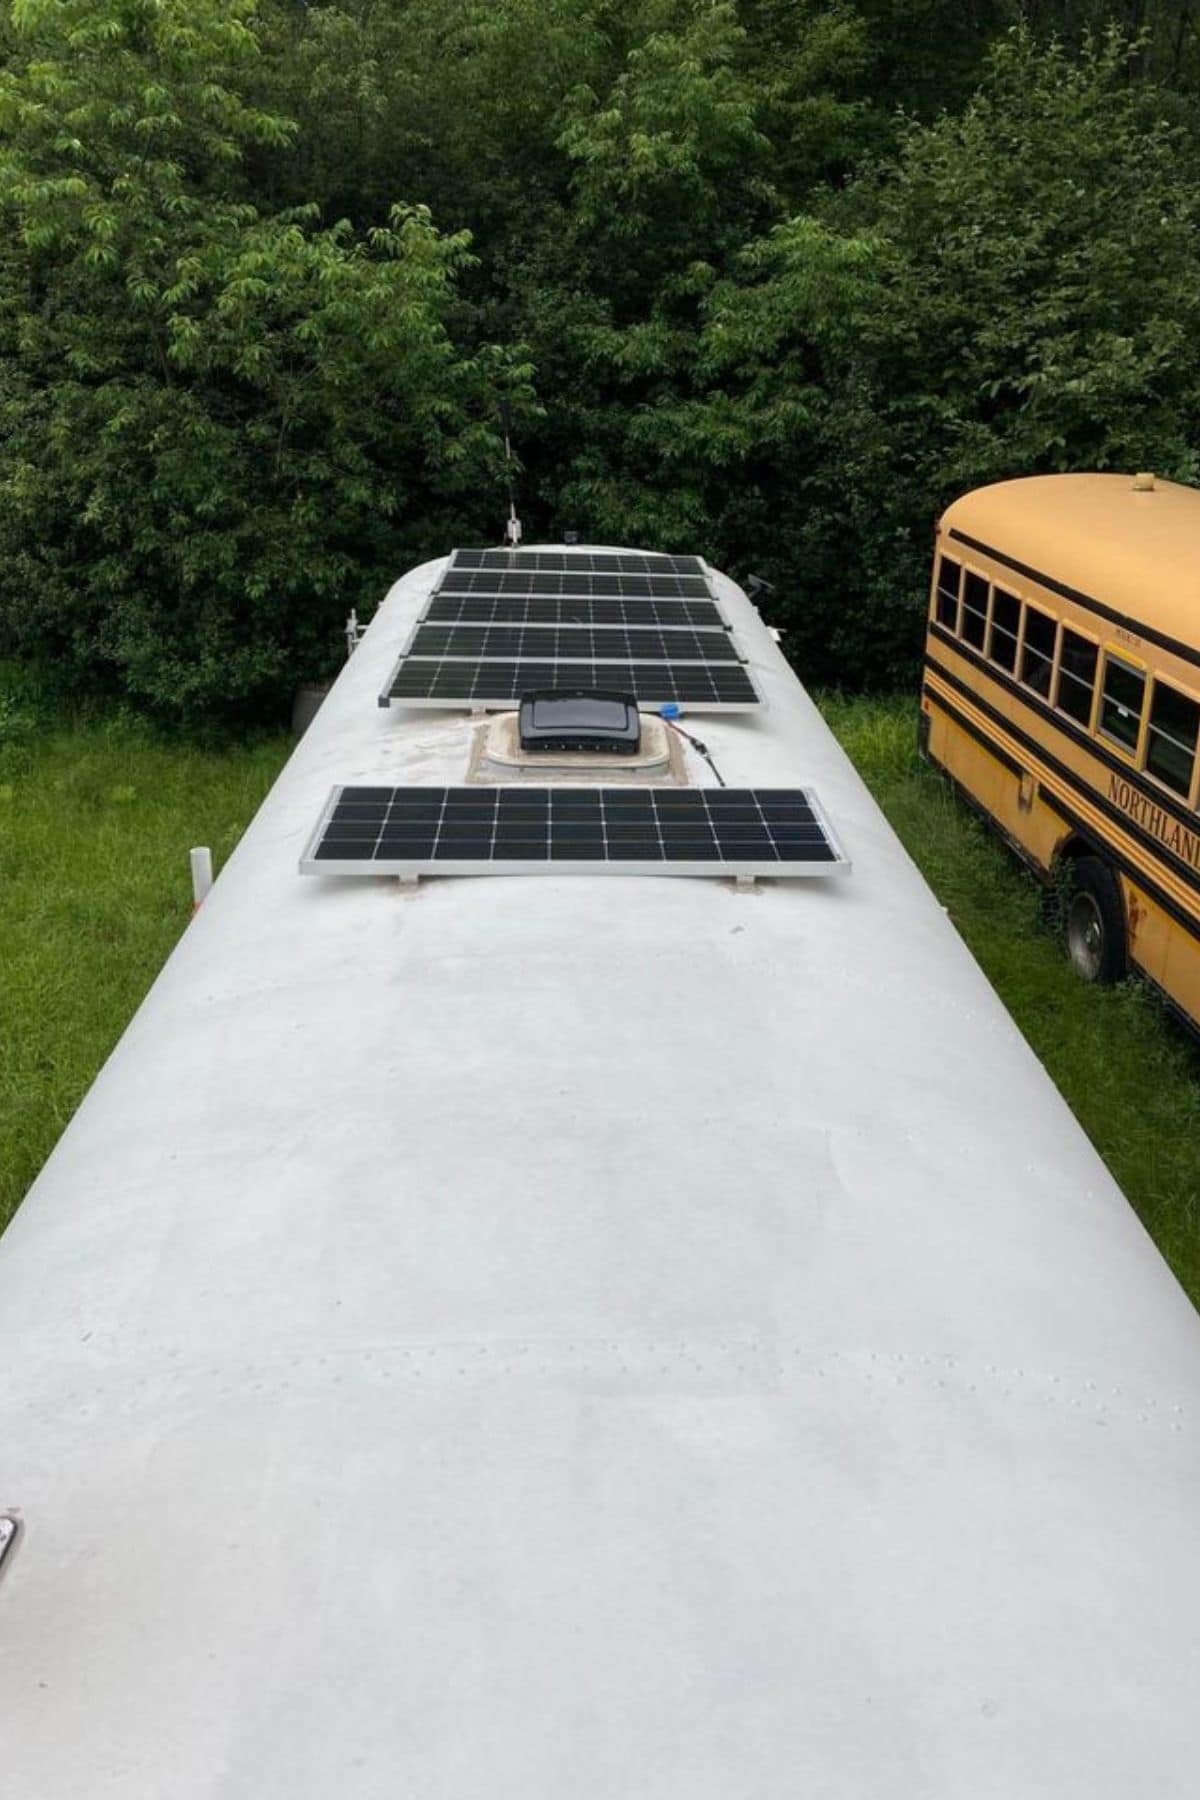 Solar panels mounted on top of skoolie